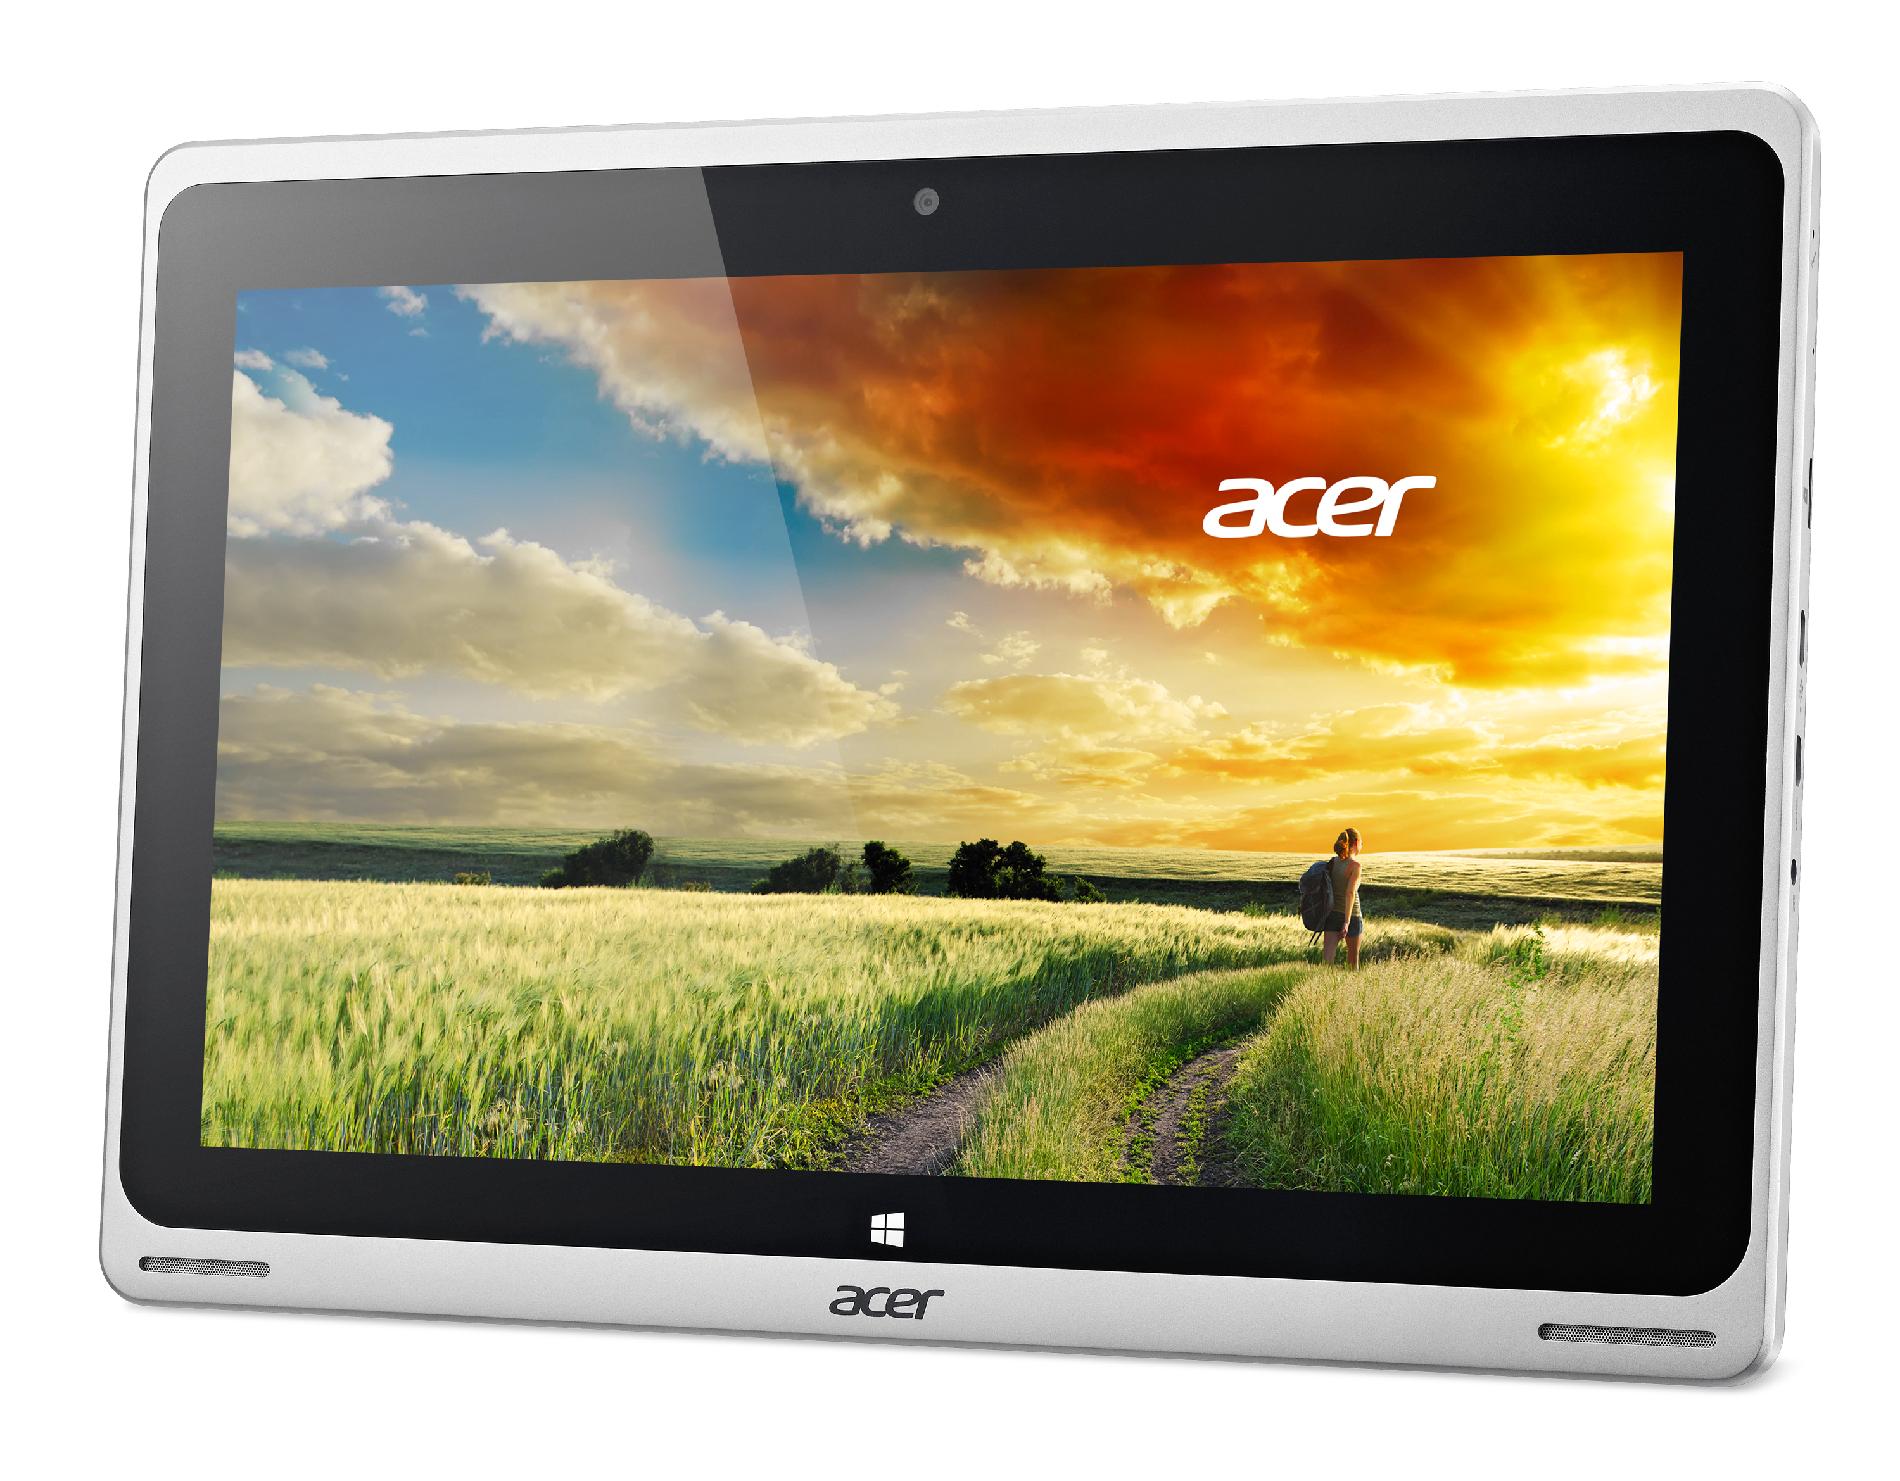 Acer Aspire SW5 10.1